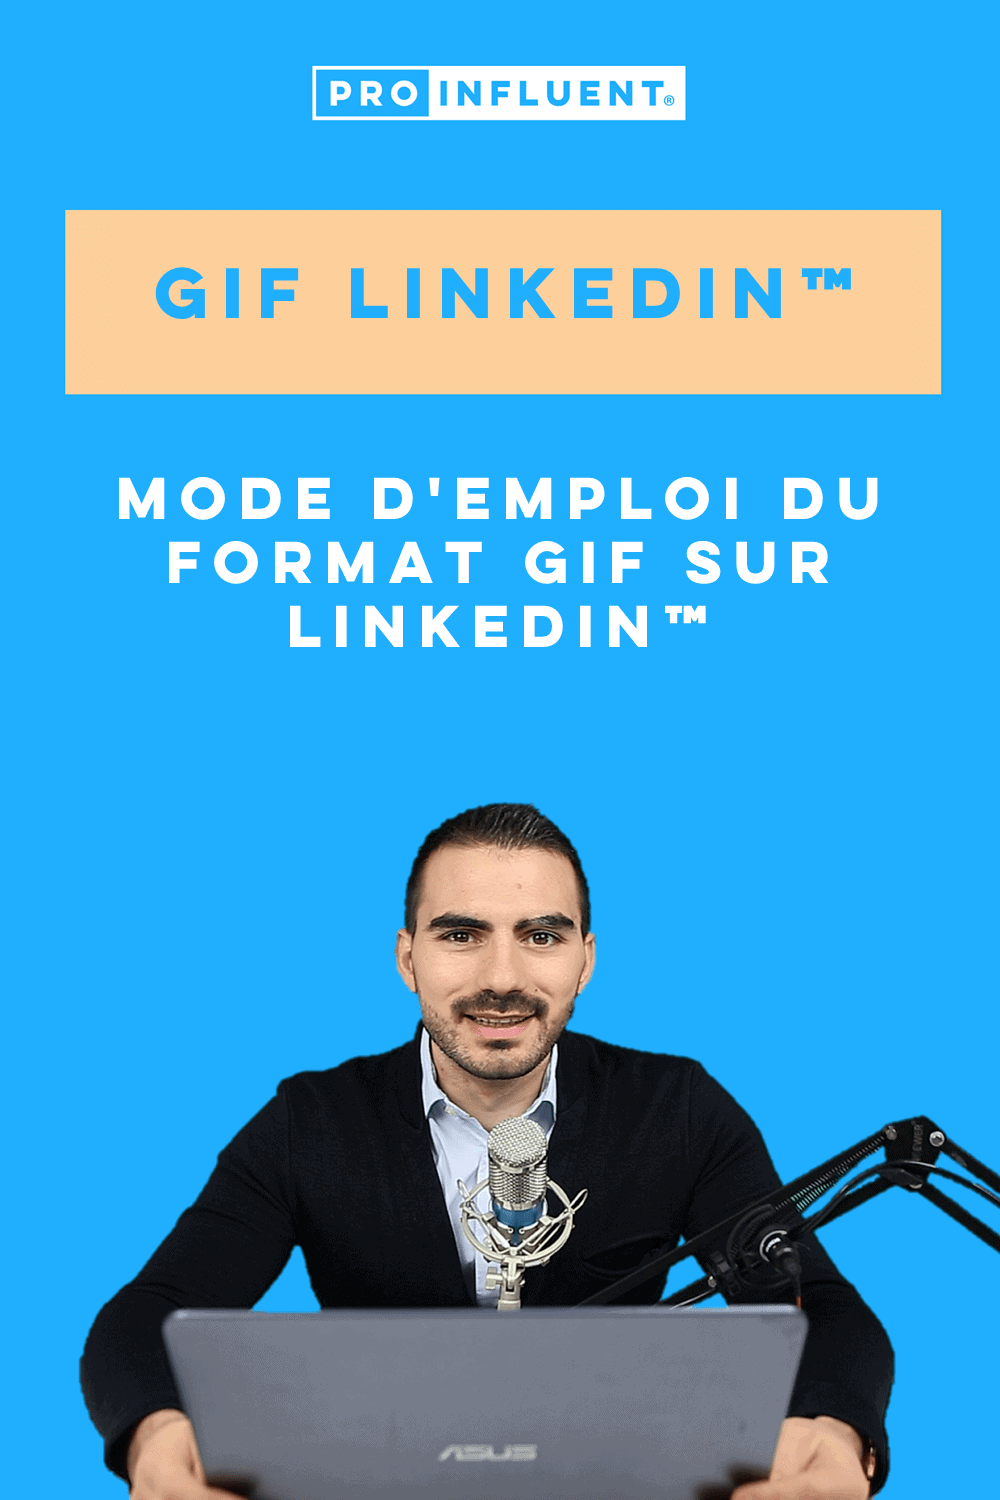 Gif LinkedIn™ : mode d'emploi du format GIF sur LinkedIn™